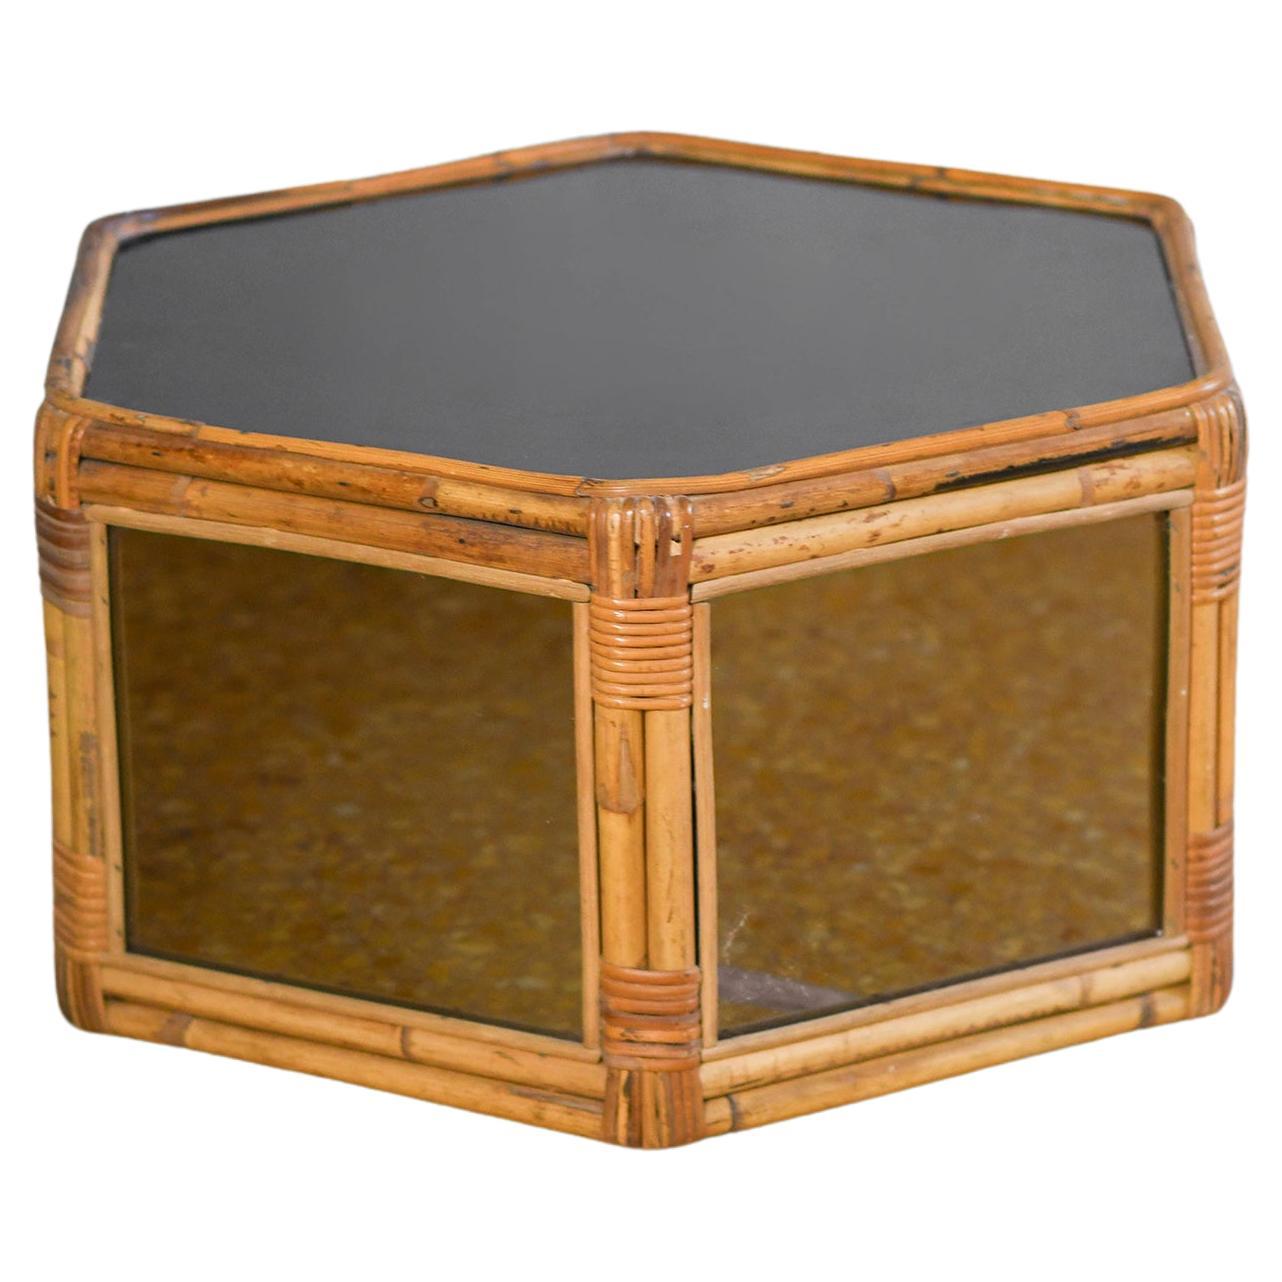 Hexagonal rattan coffee table, smoked mirrored glass and black methacrylate